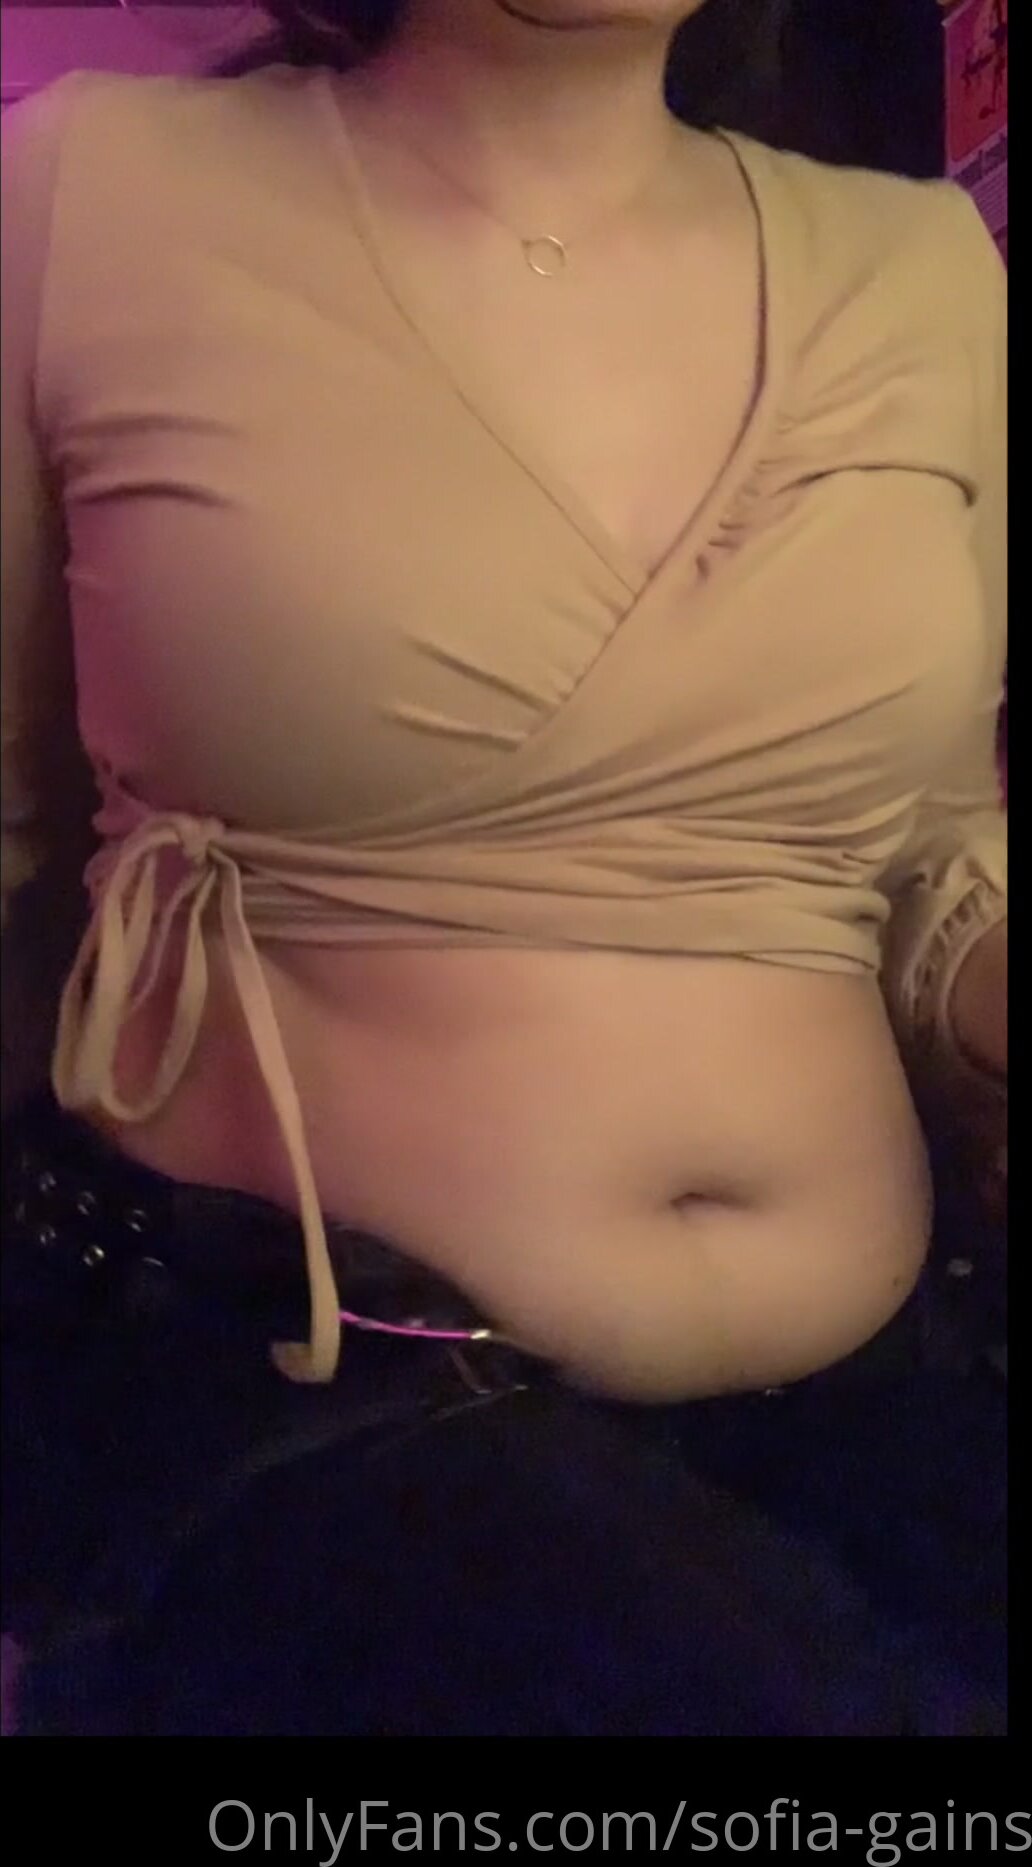 Women Porn Chubby Tummy - Fat belly skinny girl 7 - ThisVid.com